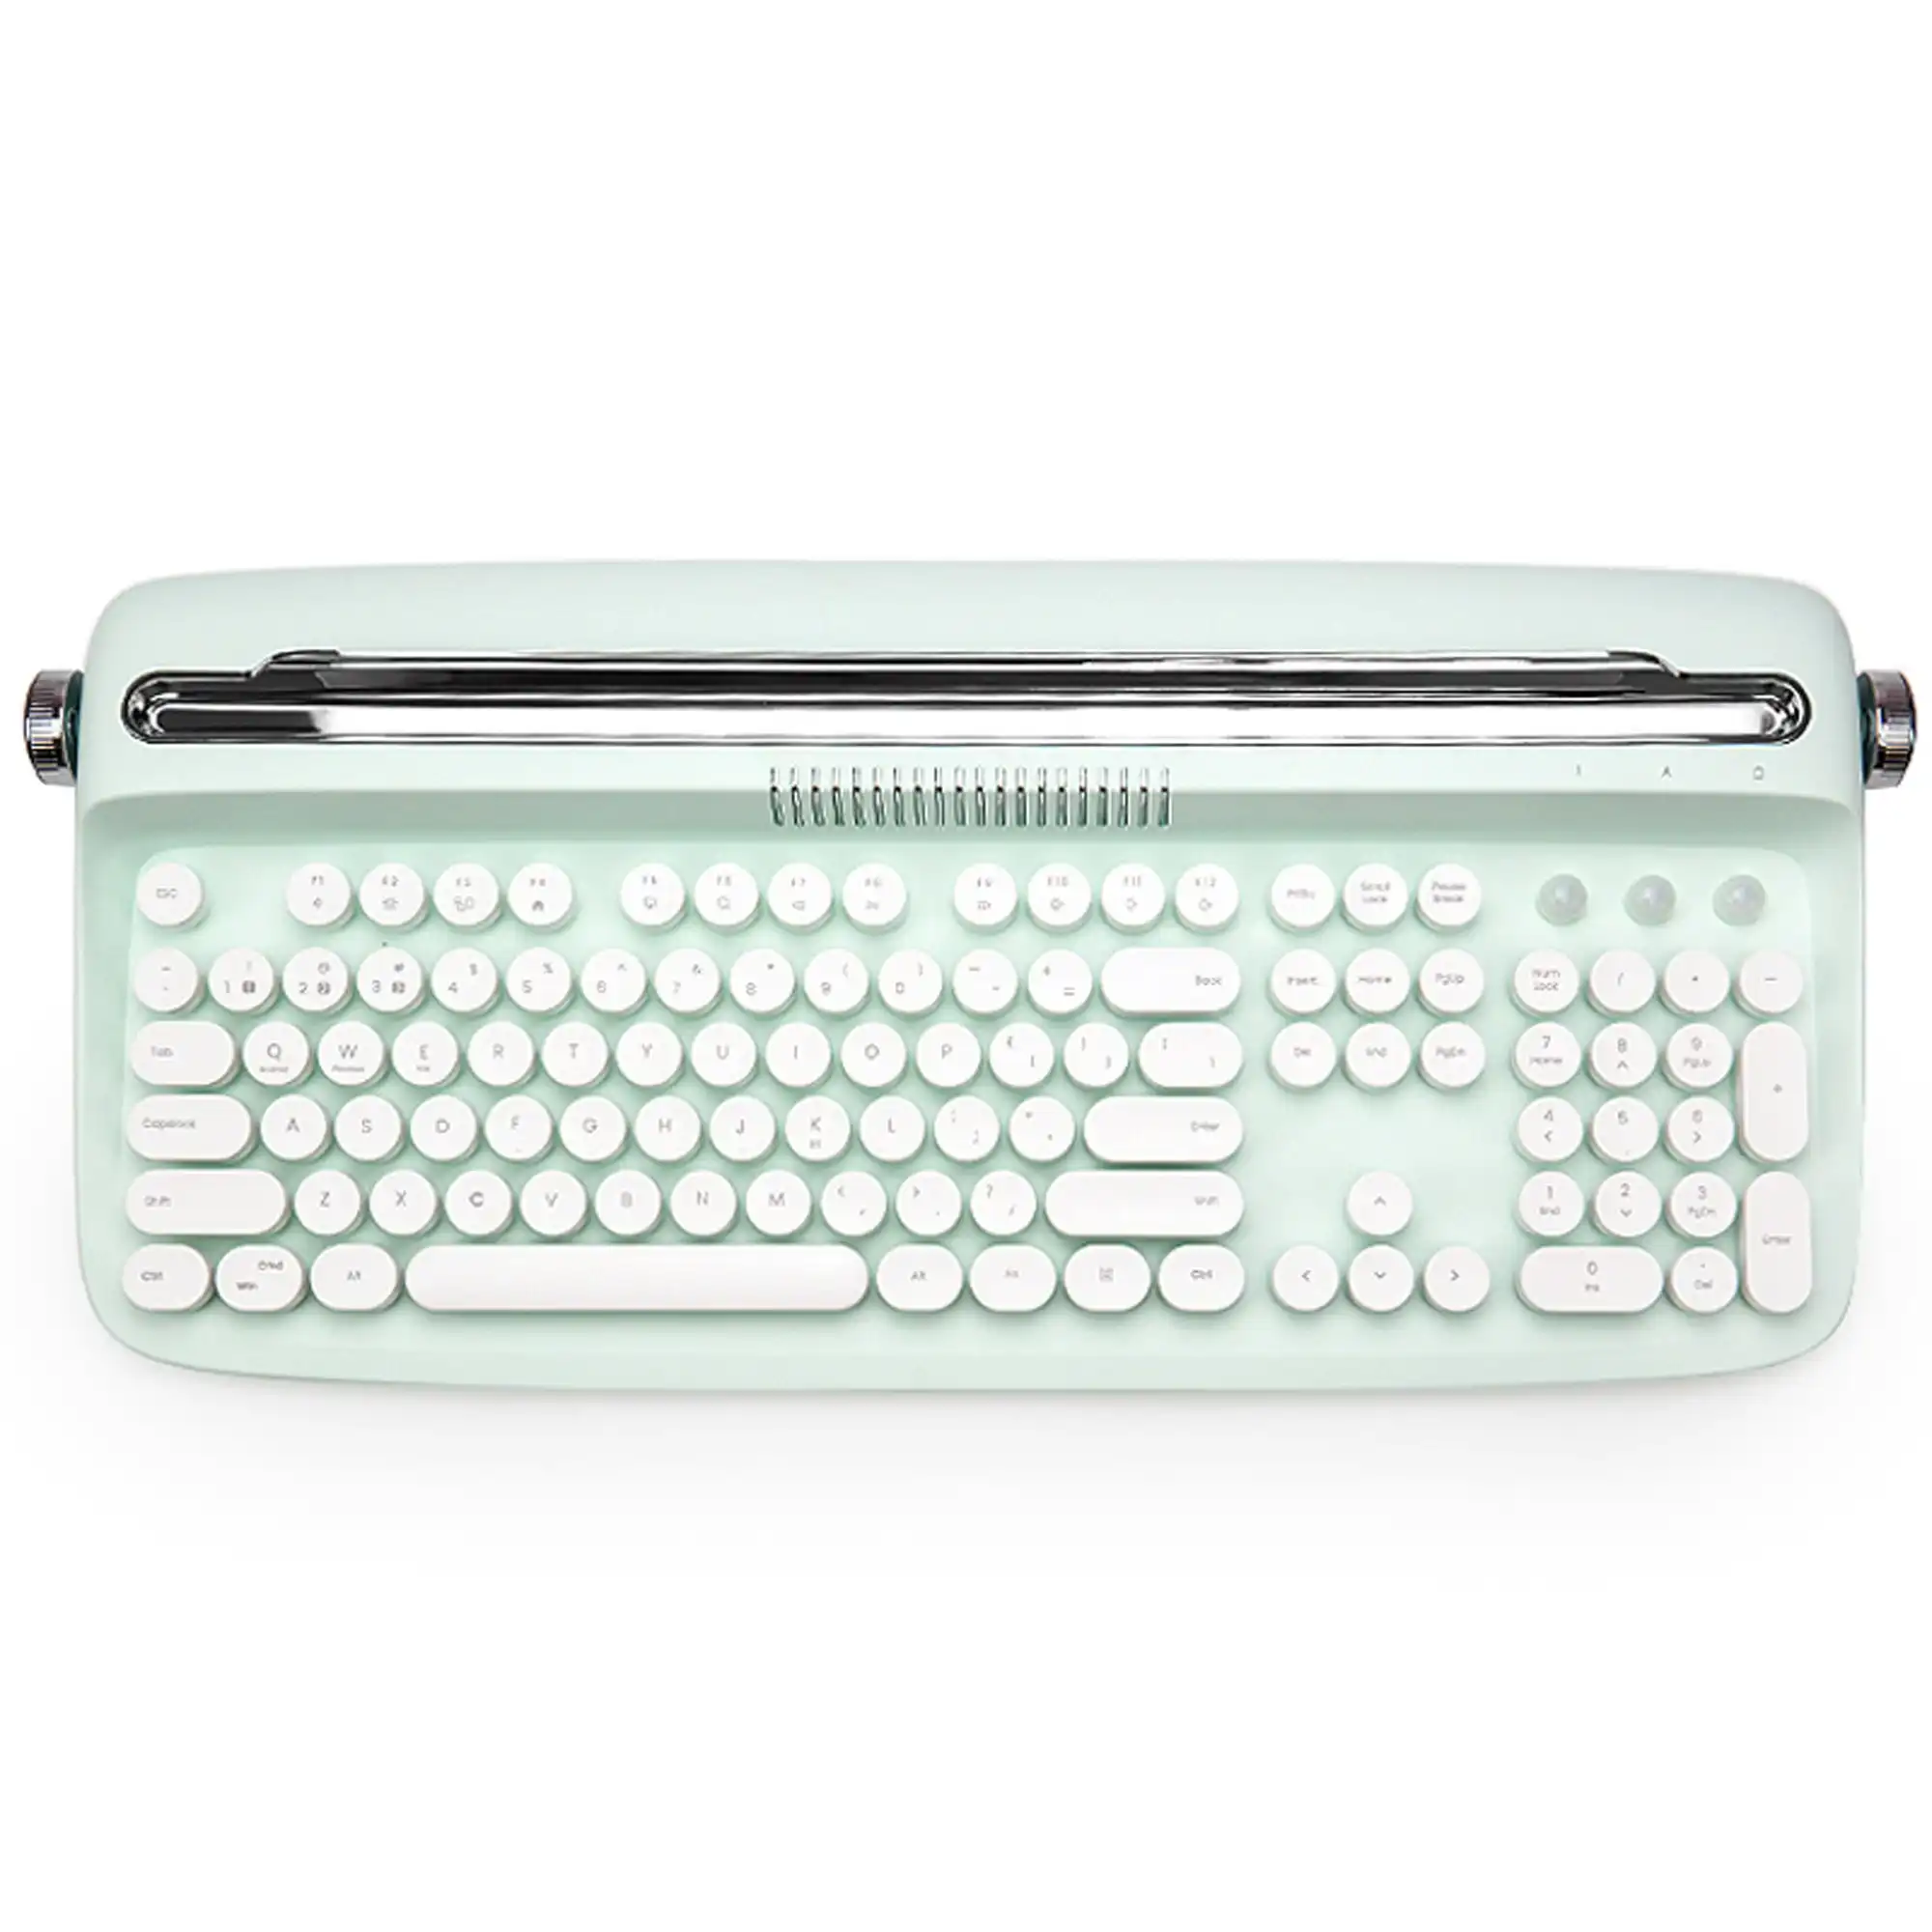 Todo Retro Typewriter Bluetooth Wireless Keyboard Tablet Holder 104 Key Mac Win Android BT 5.0 - Green Mint